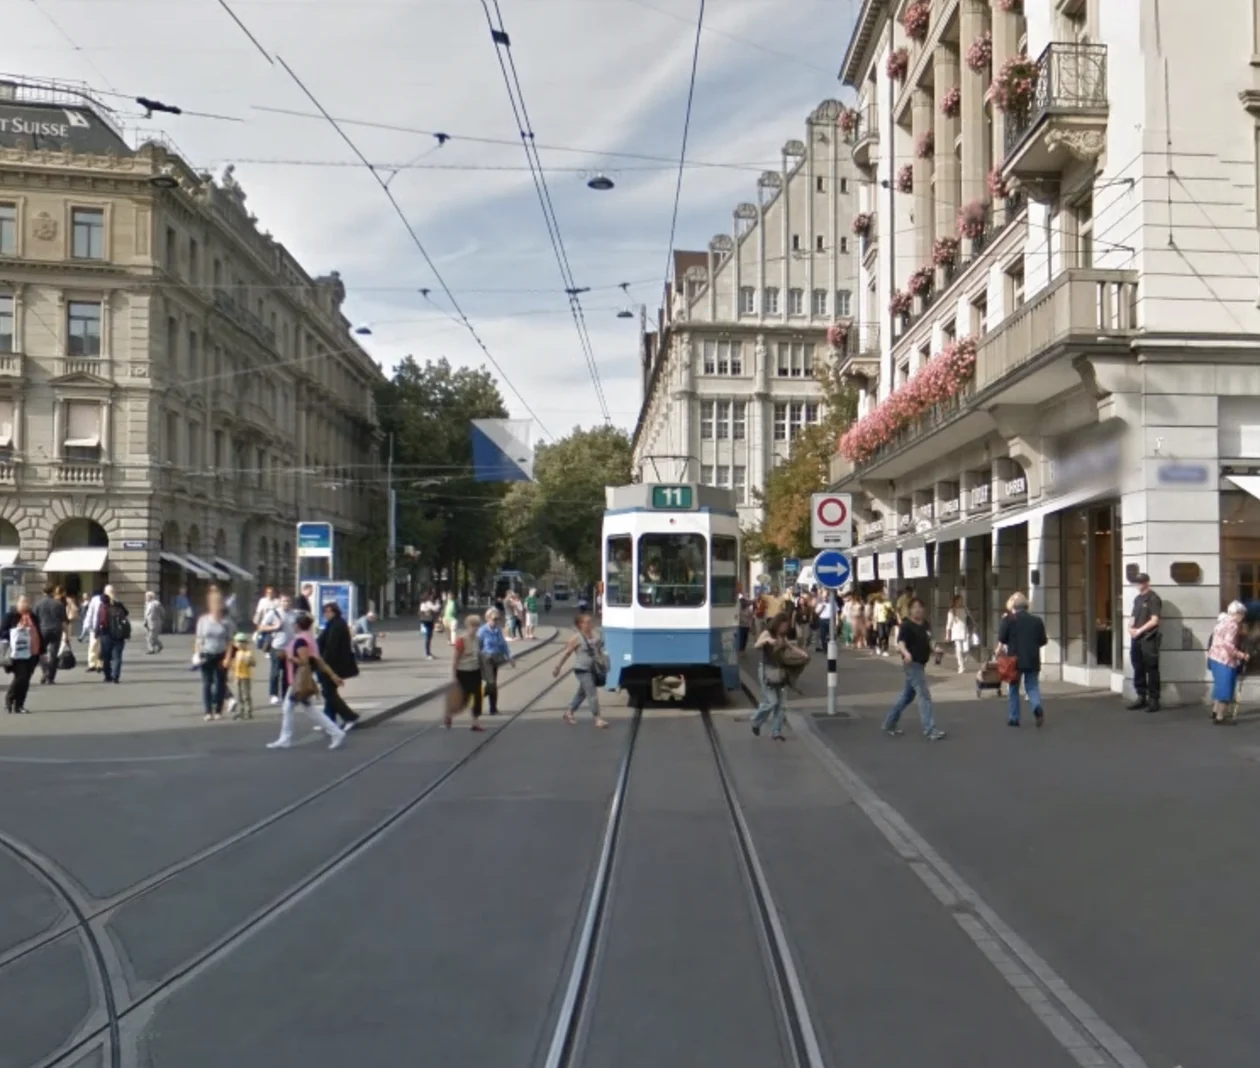 A street-level image of crosswalks in Zurich